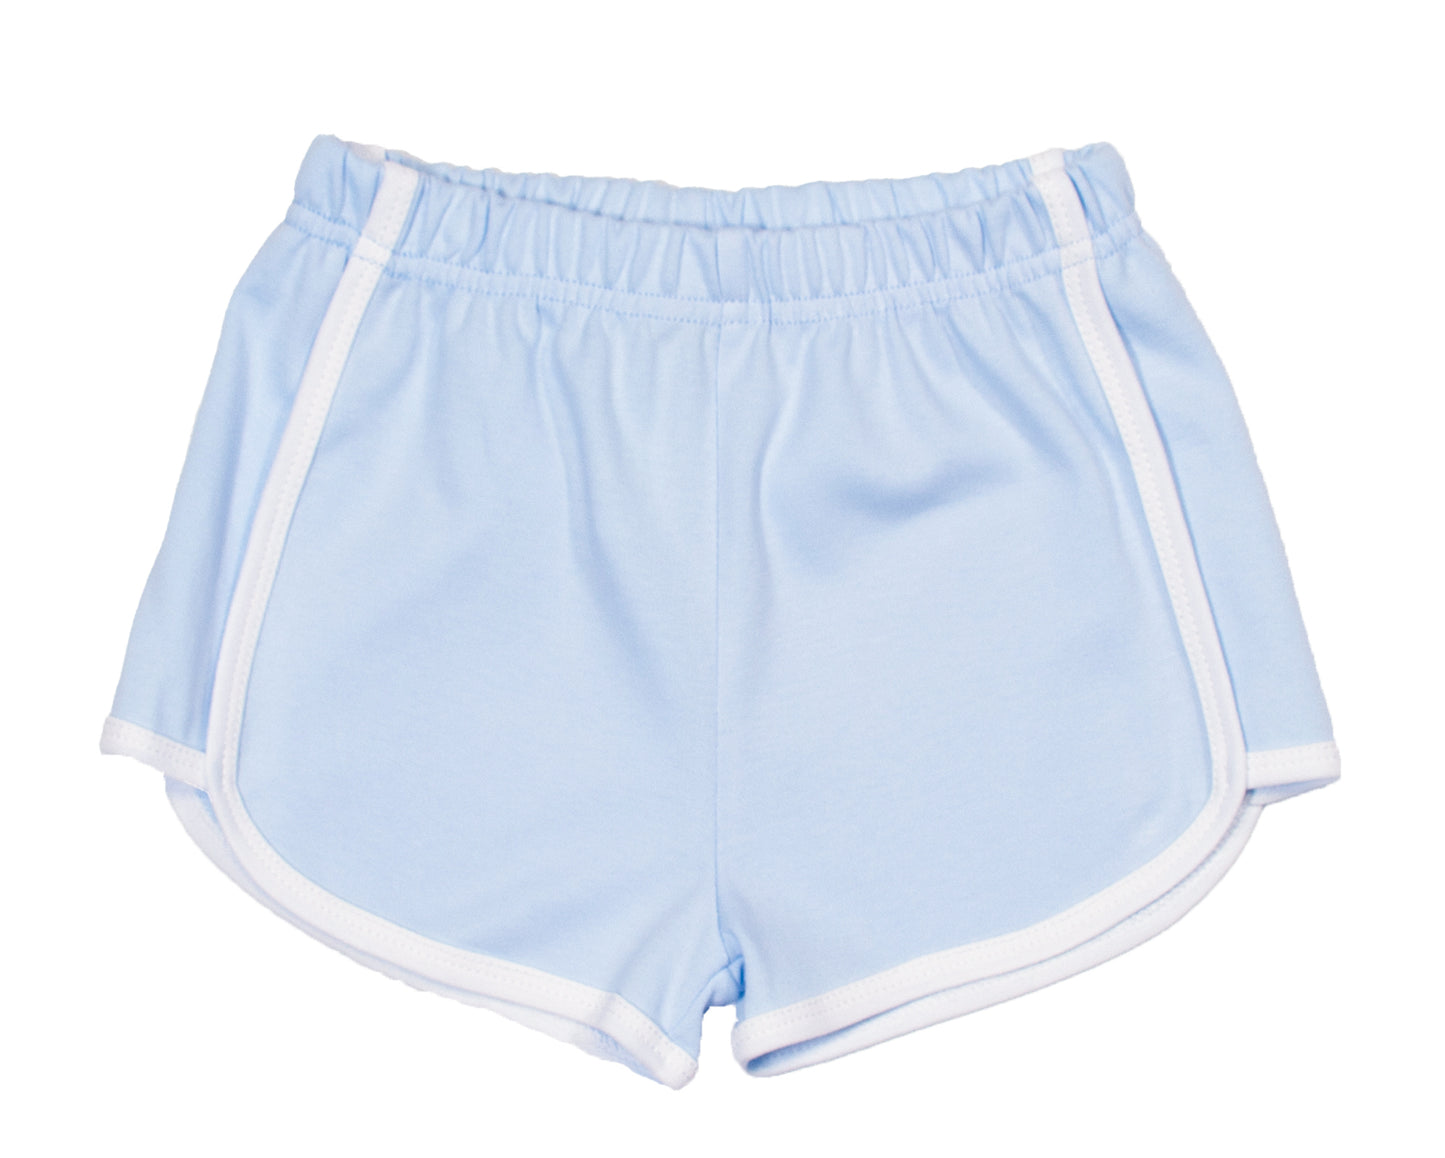 Lexa Shorts Solid Blue w/white